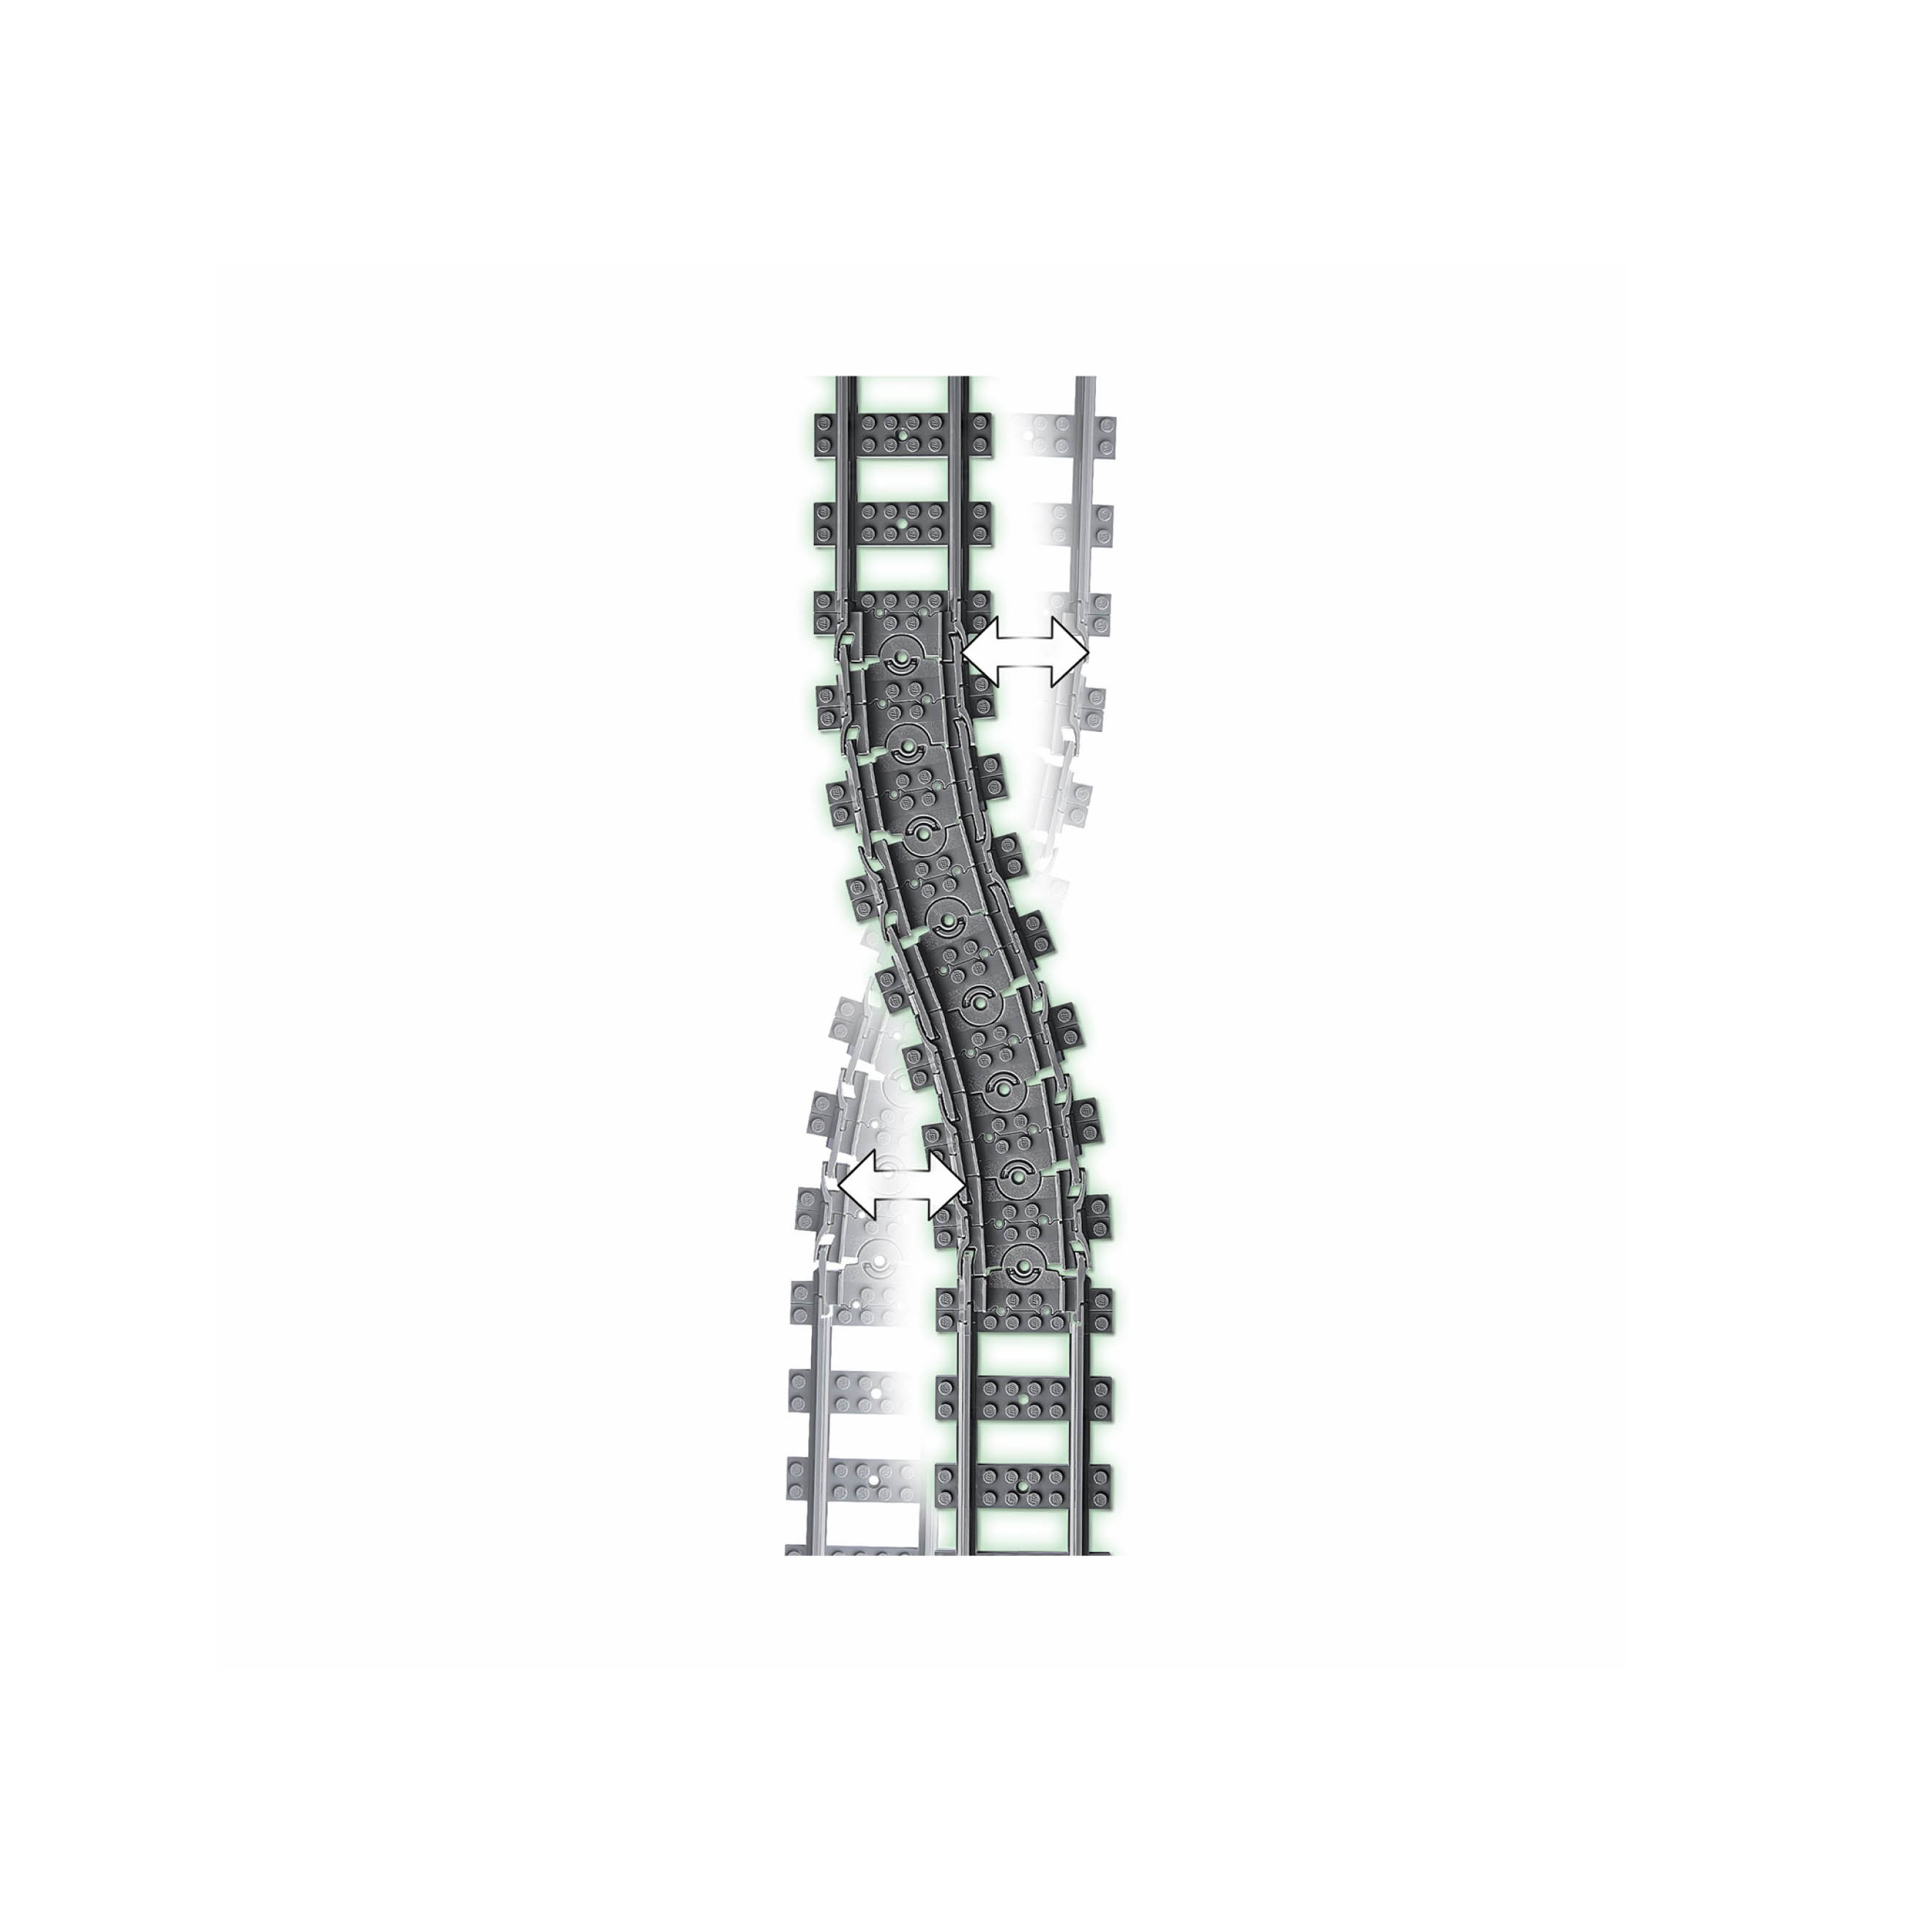 LEGO City Trains Binari, 20 Pezzi Set Accessori di Espansione, 60205 60205, , large